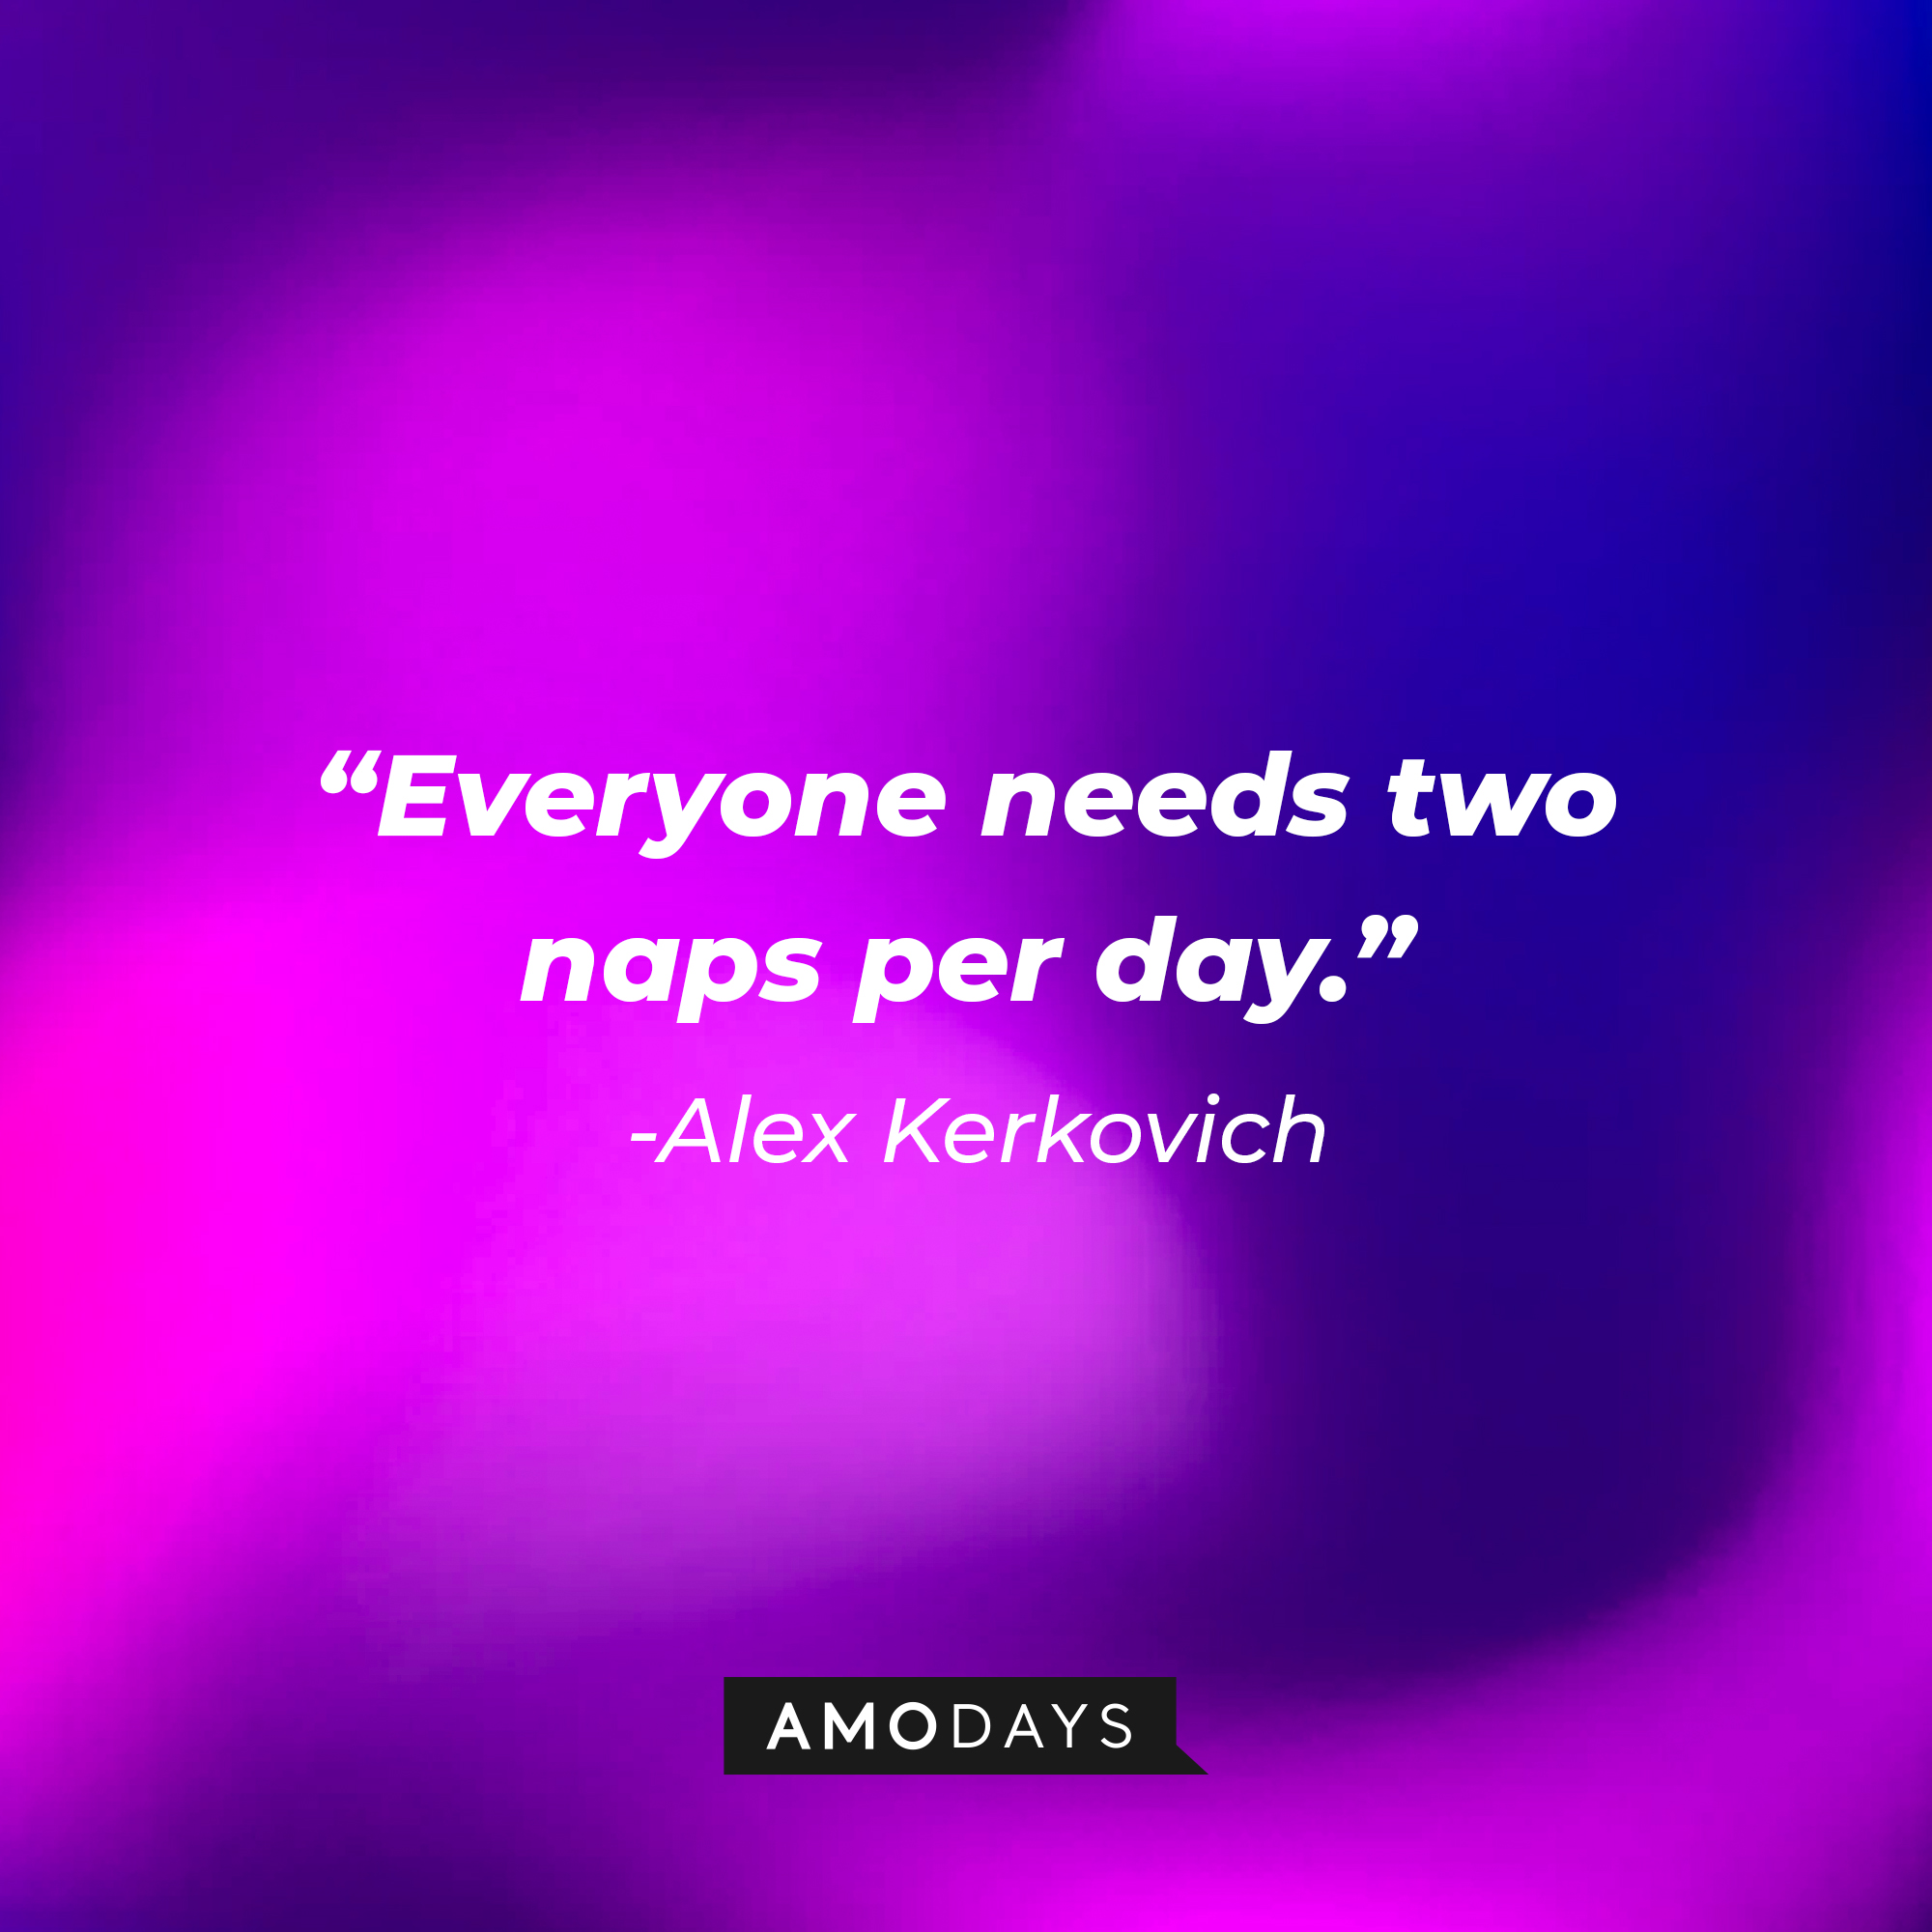 Alex Kerkovich's quote, "Everyone needs two naps per day." | Source: Facebook/HappyEndings